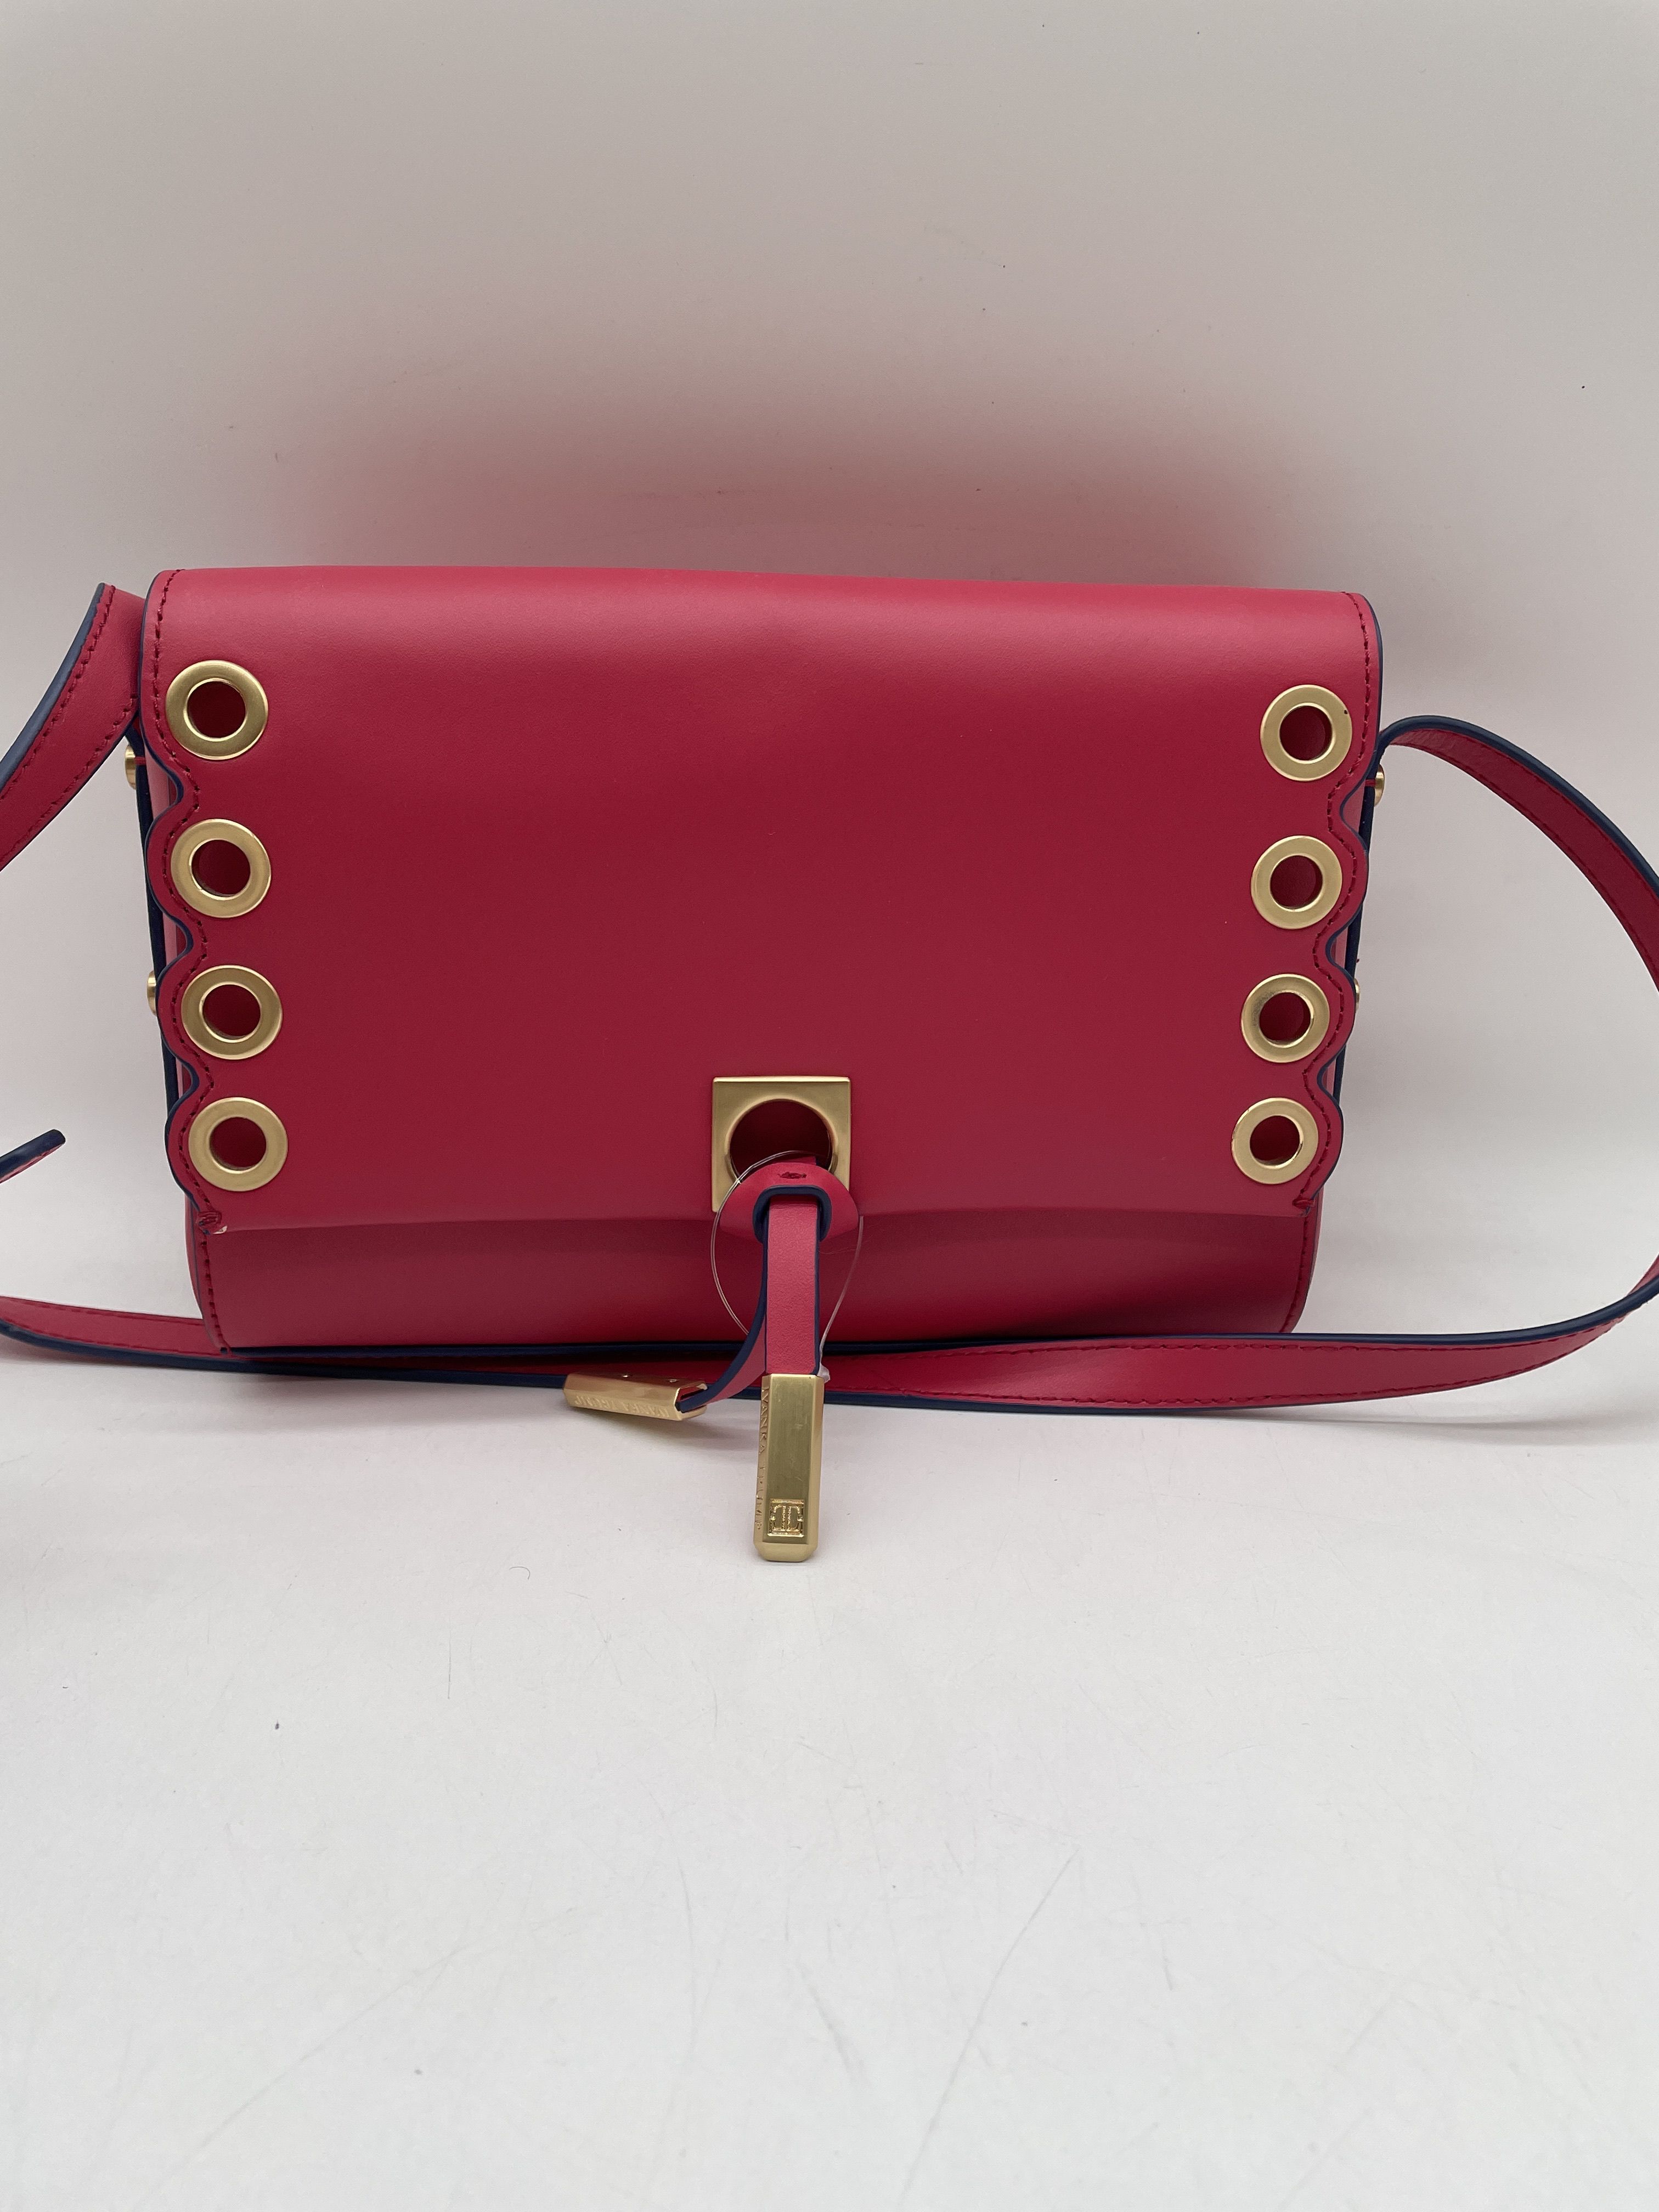 Ivanka Trump Faux Leather Crimson Purse Handbag Gold Accents & Sarah Shaw  Clutch | eBay